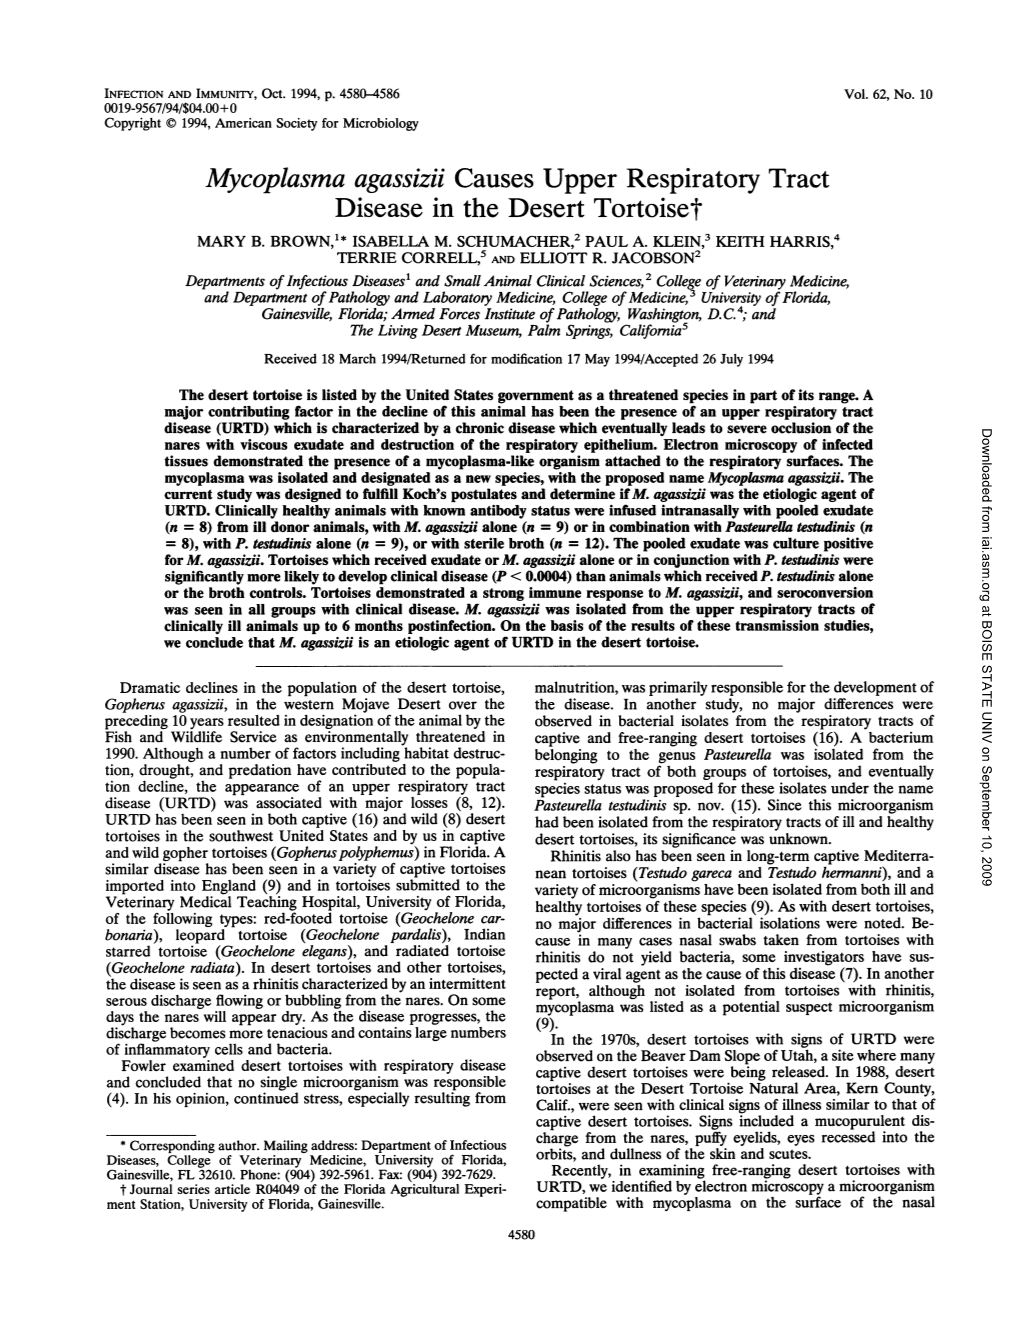 Mycoplasma Agassizii Causes Upper Respiratory Tract Disease in the Desert Tortoiset MARY B